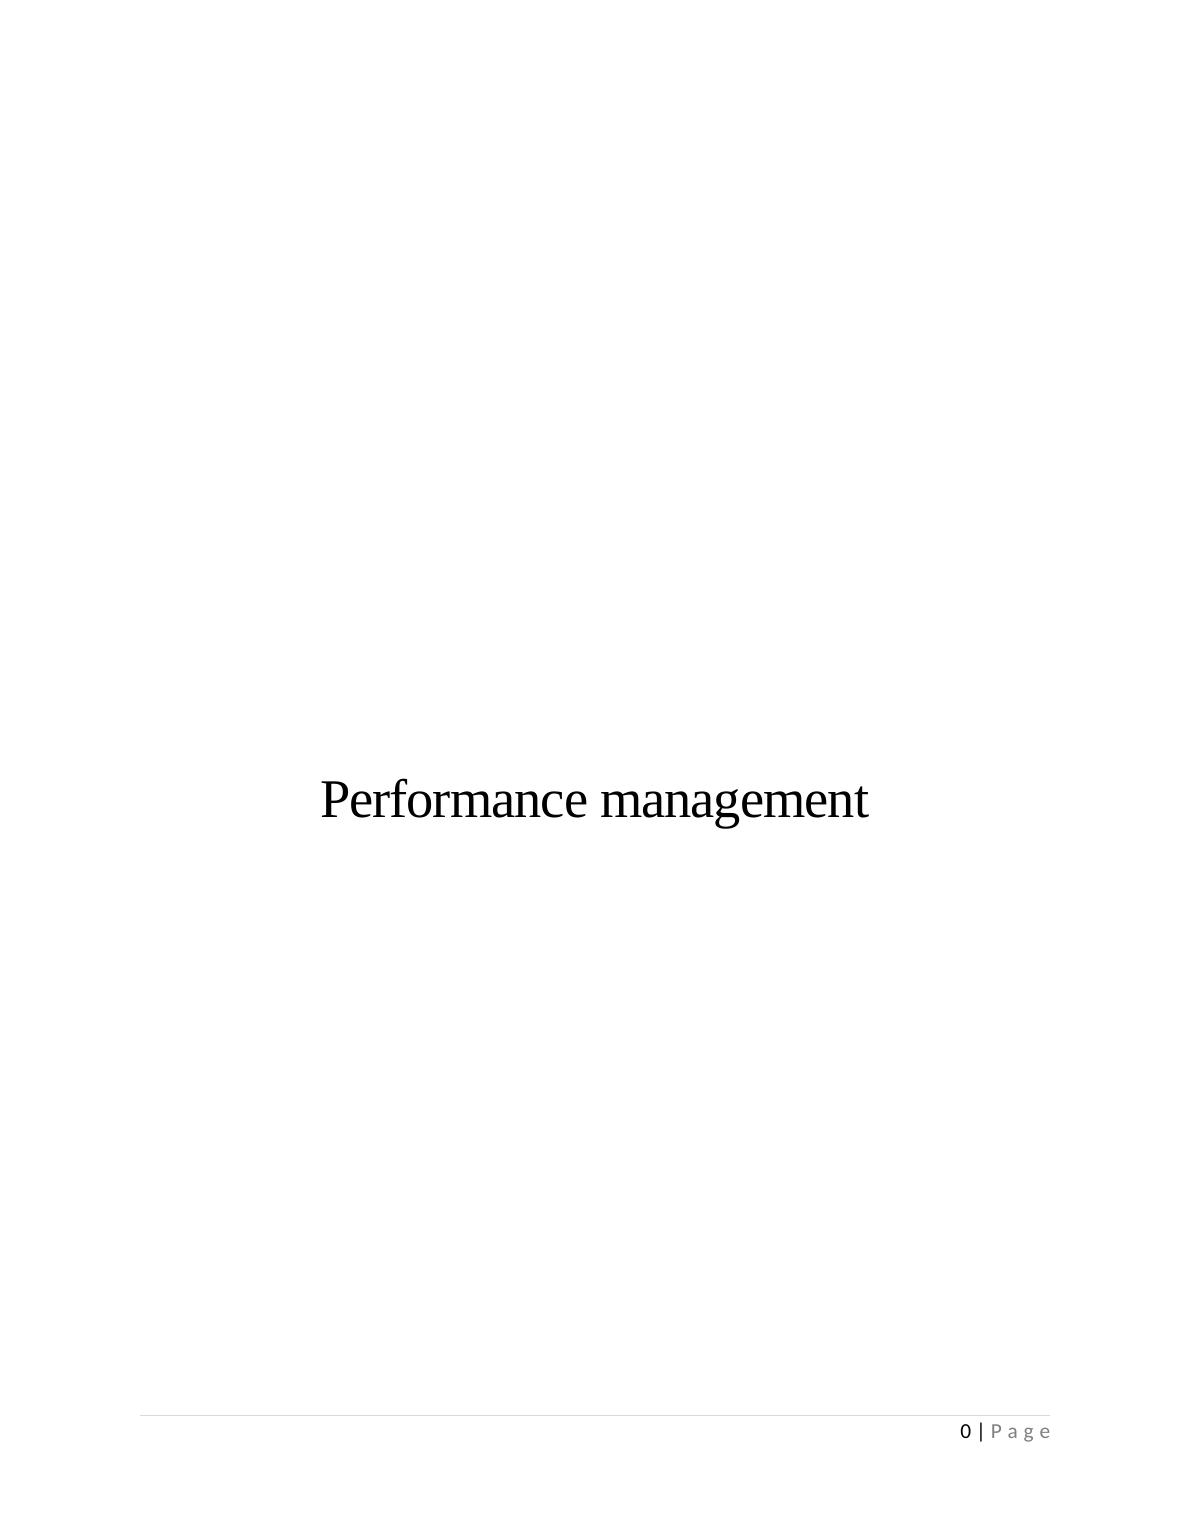 Performance Management Process_1